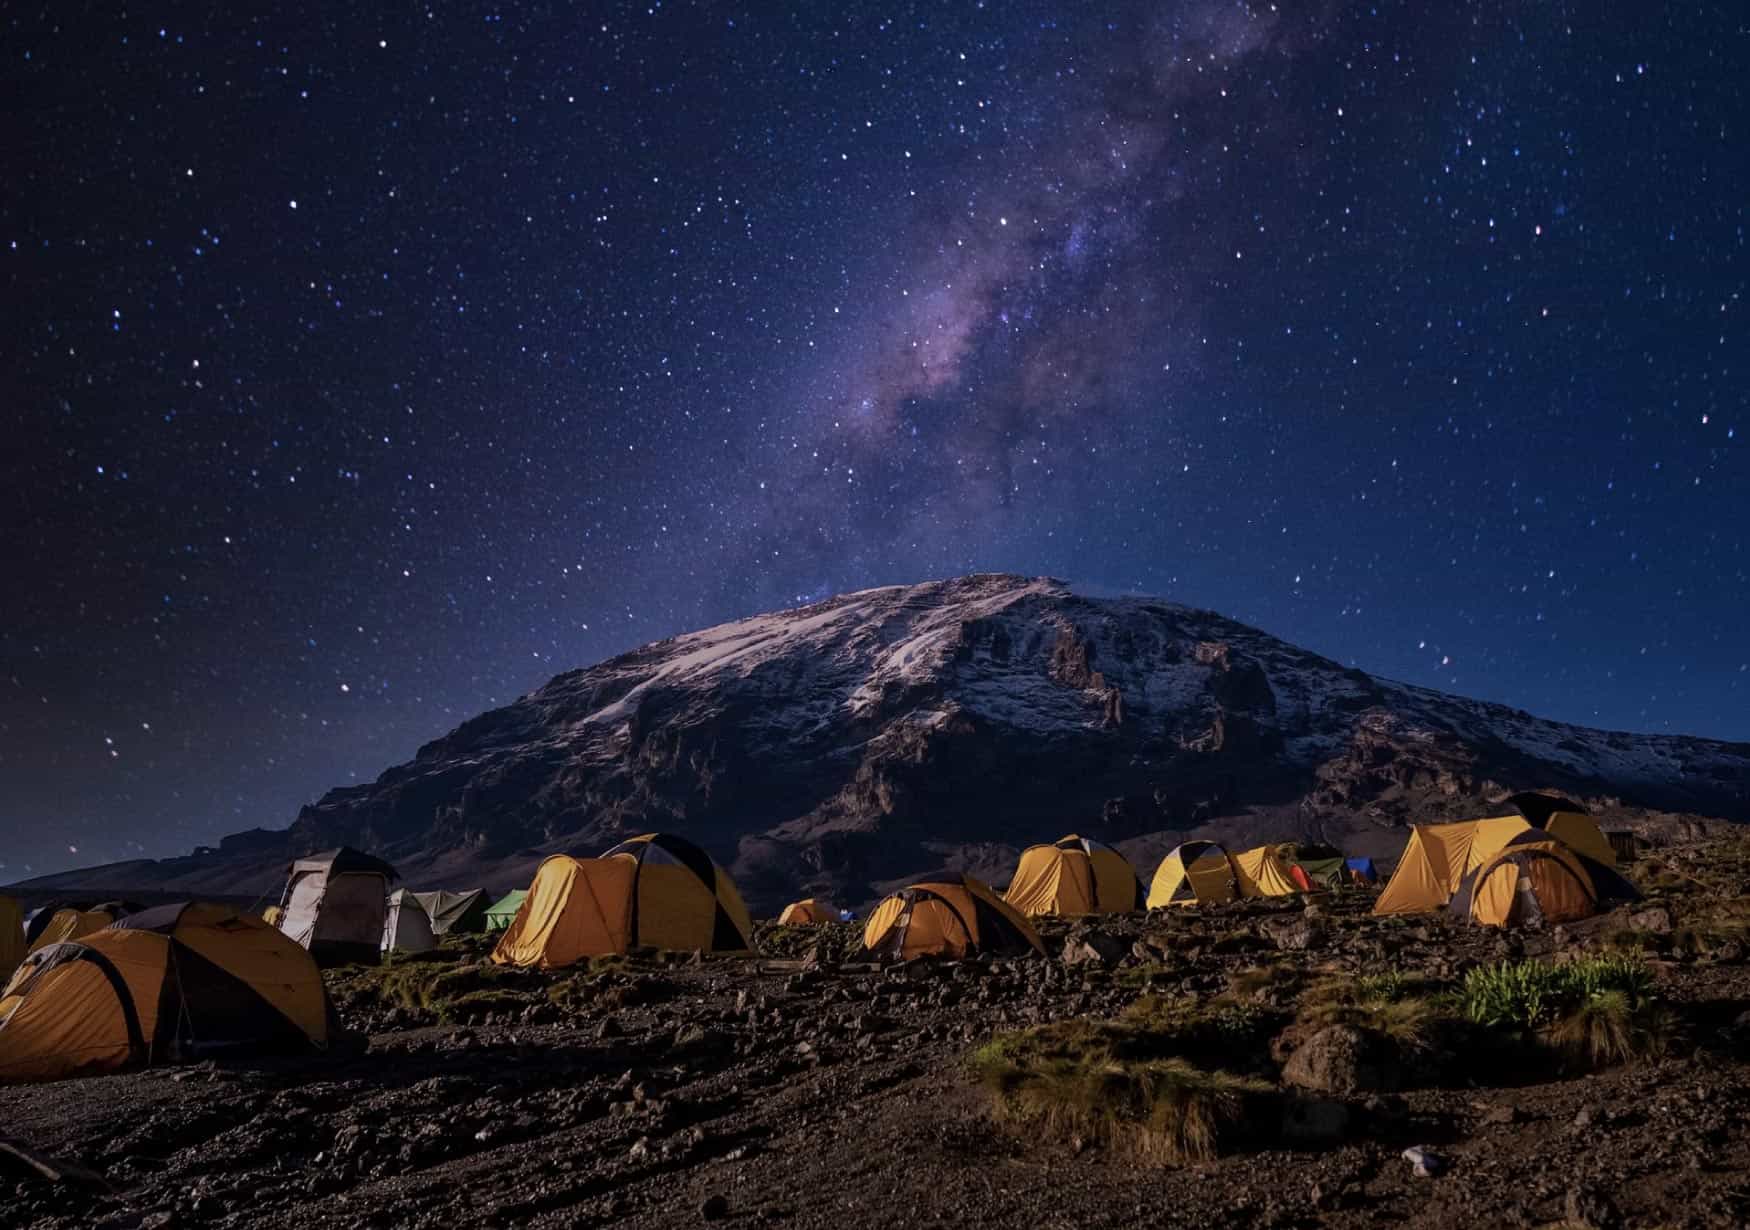 Peak Pursuits 3: Mt. Kilimanjaro Climb through Lemosho Route.